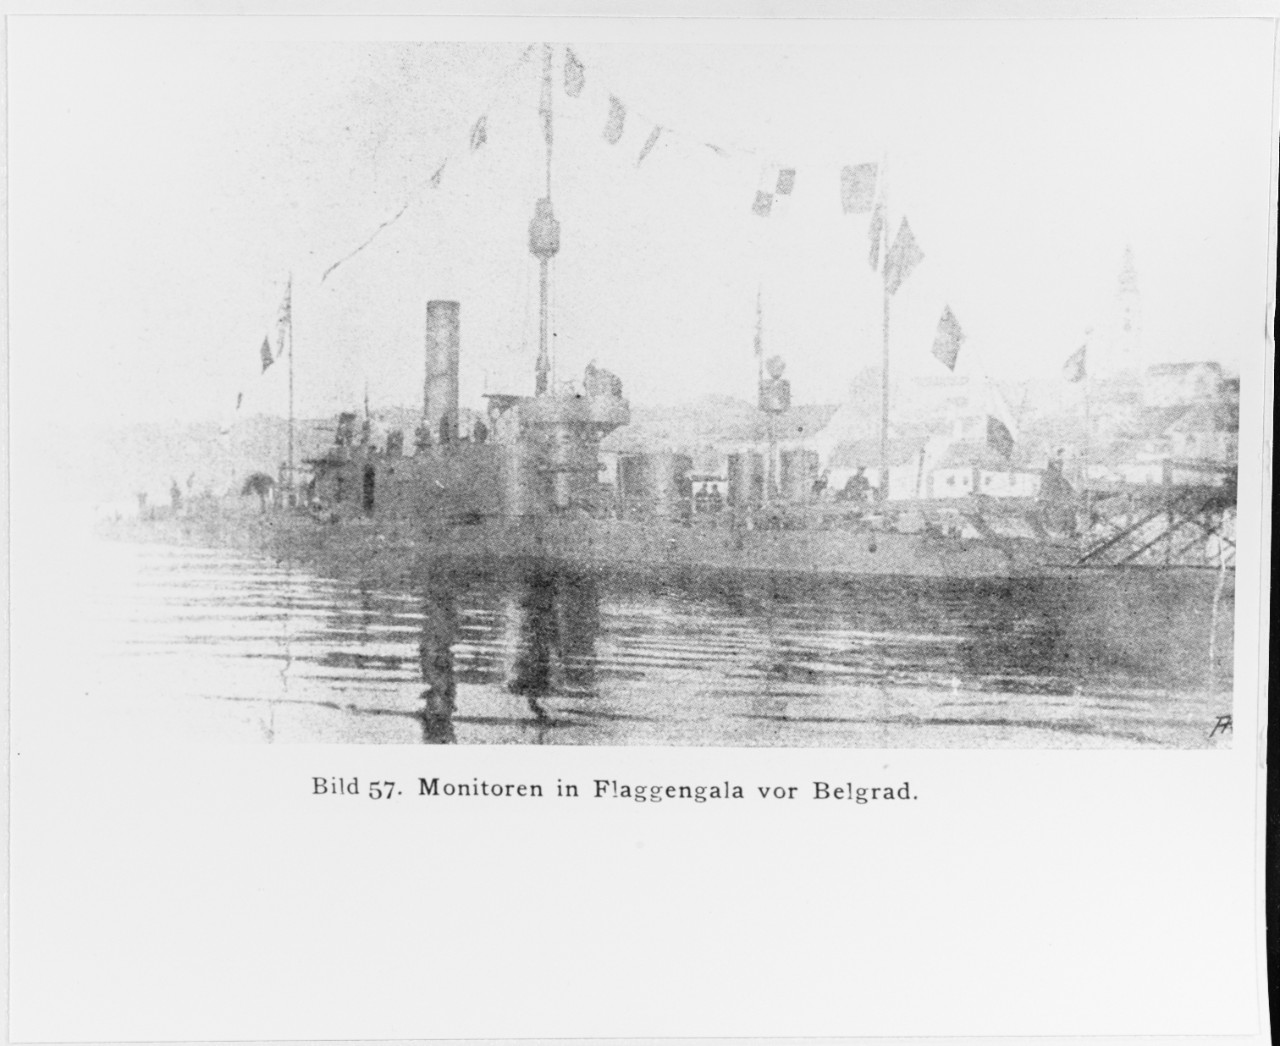 BODROG Austrian River Monitor, 1904